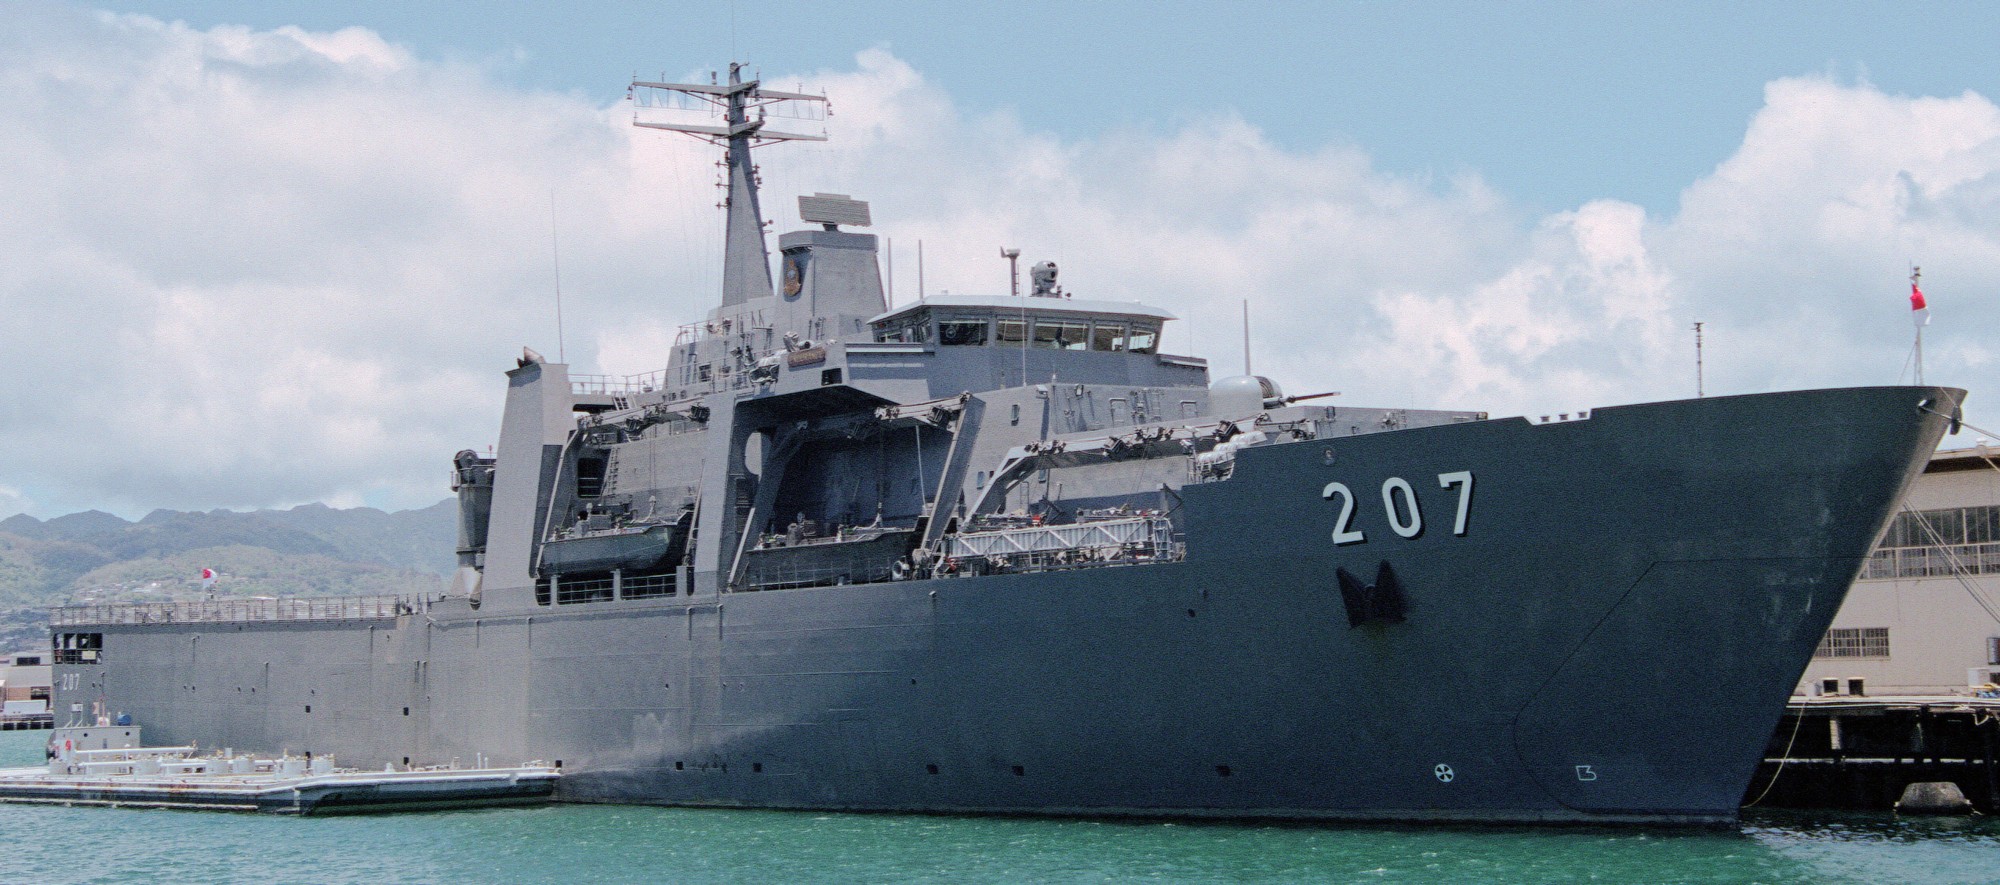 207 rss endurance class amphibious transport dock landing ship lpd republic singapore navy 10